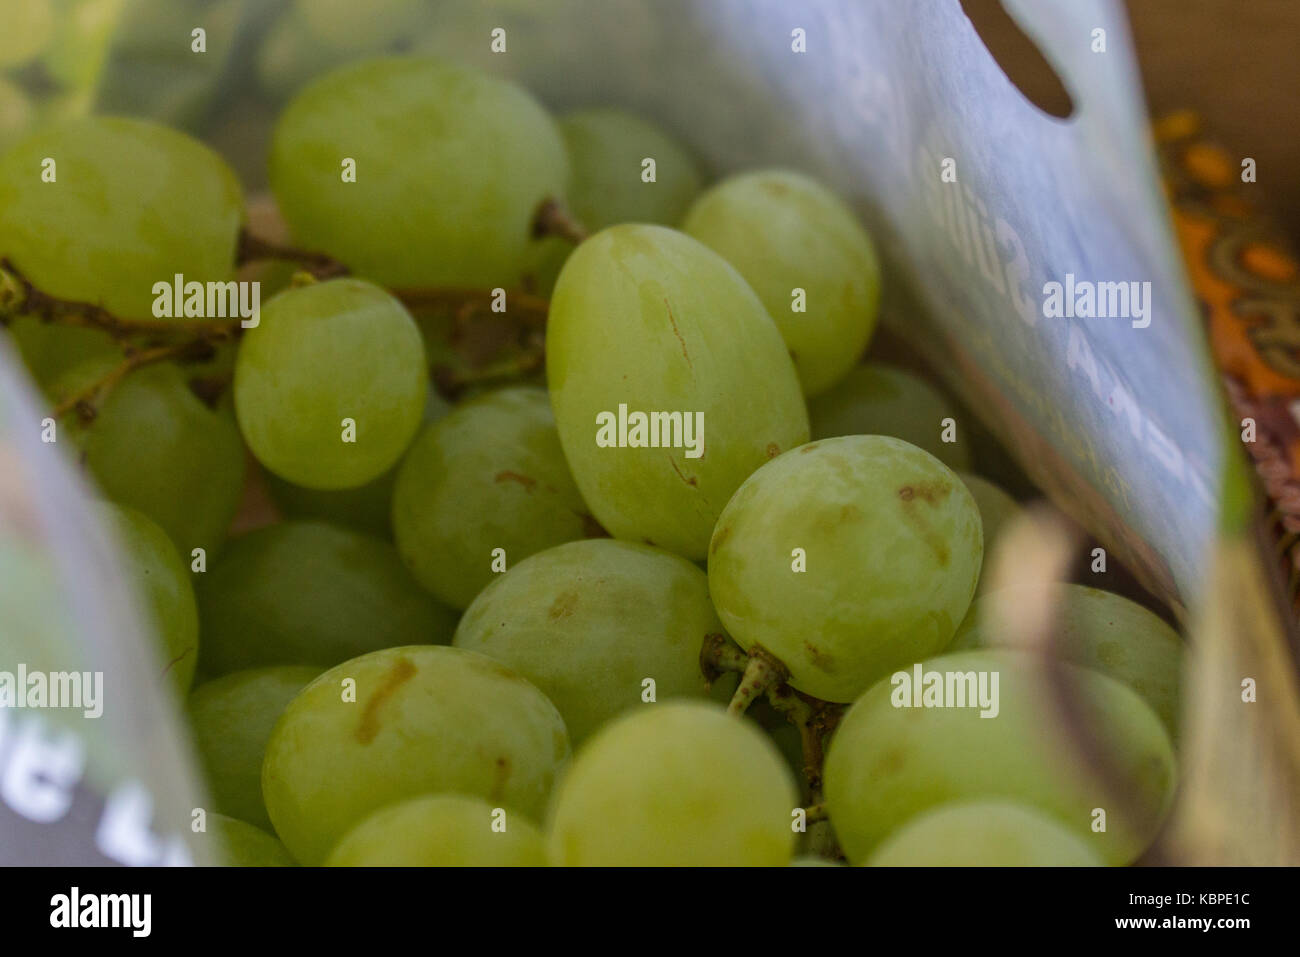 green grapes group close up frsh fruits Stock Photo